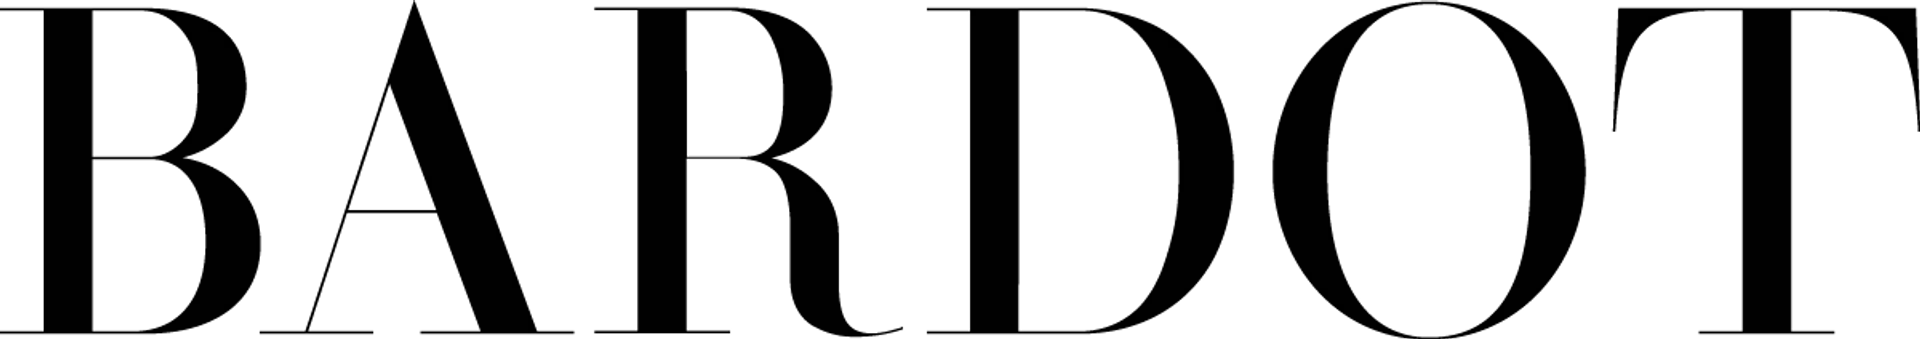 BARDOT logo of current flyer